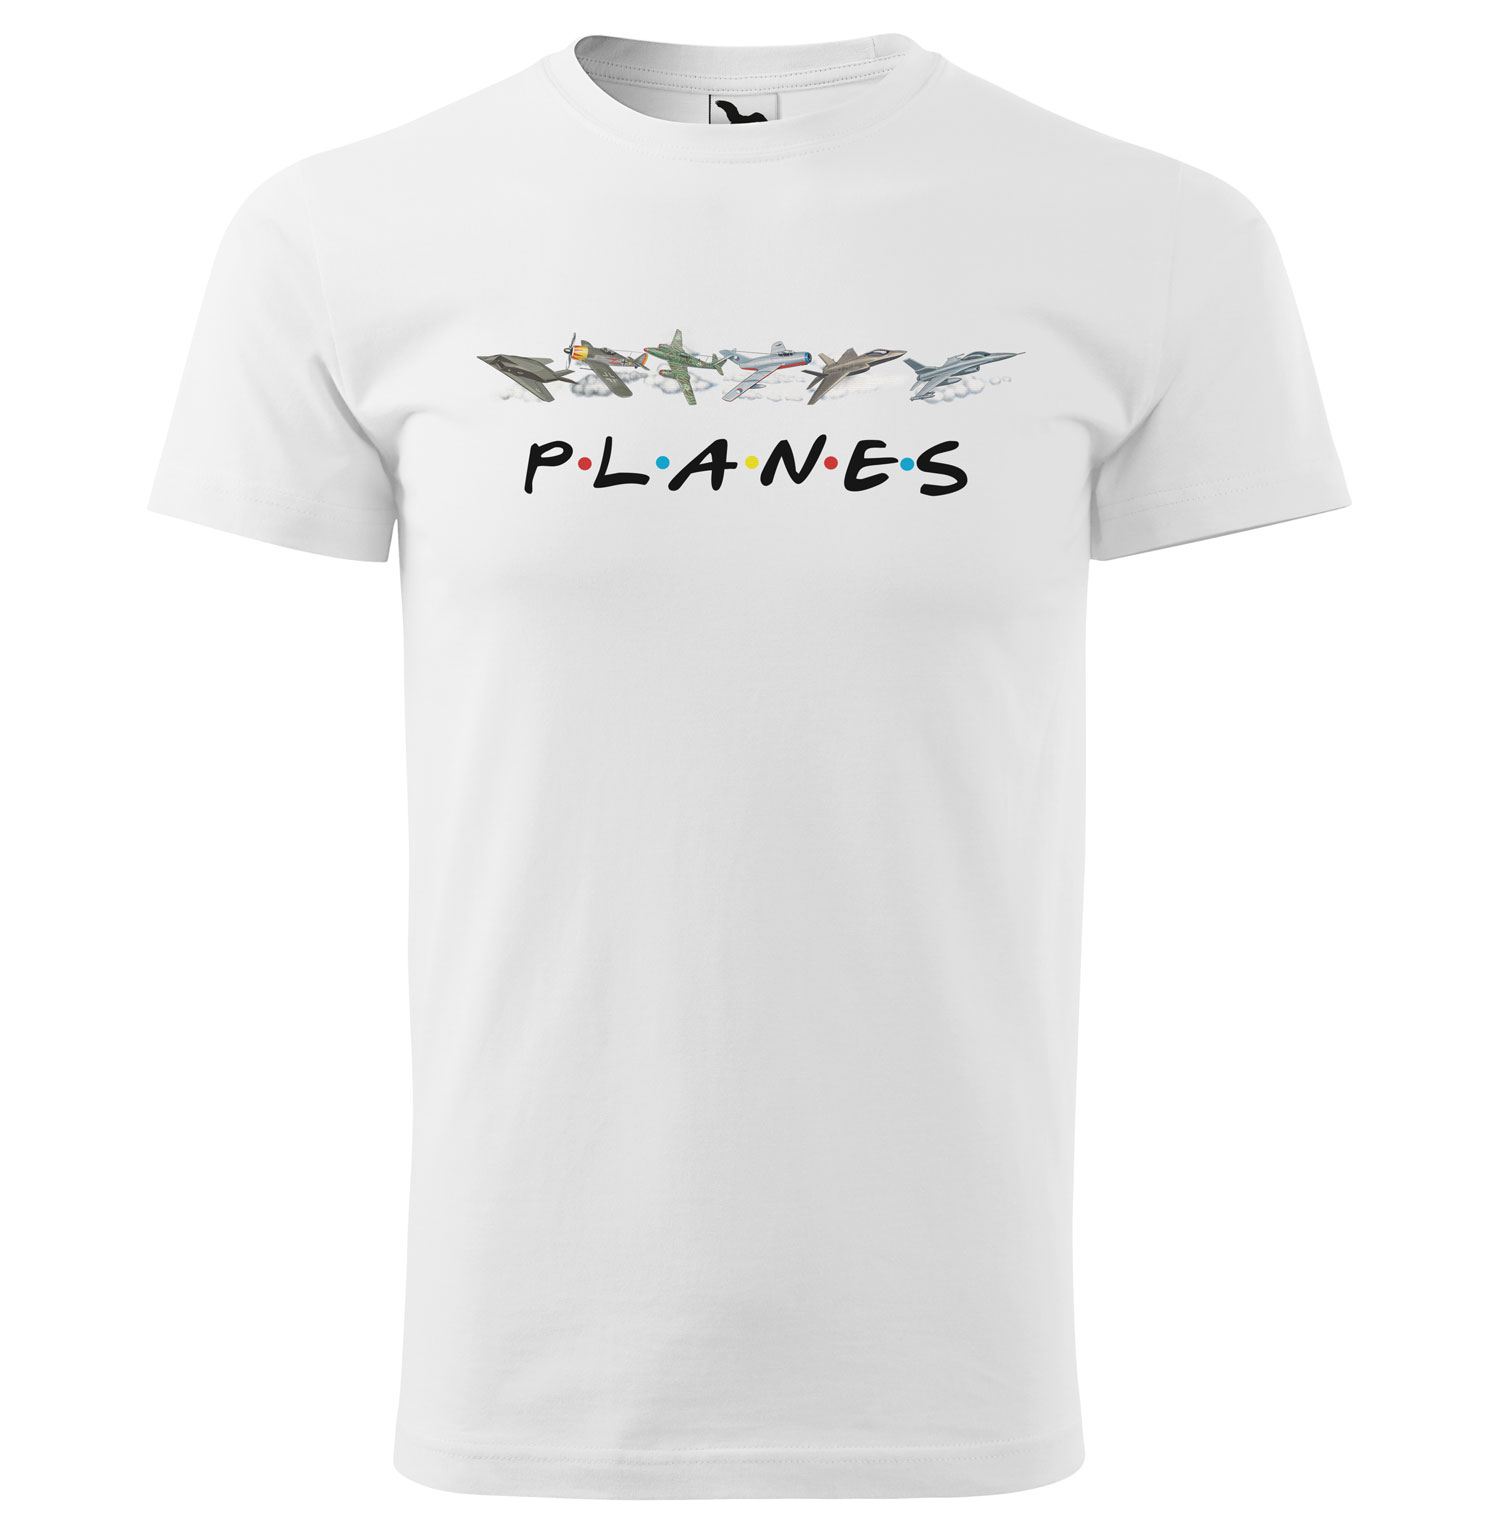 Tričko Planes (Velikost: 4XL, Typ: pro muže, Barva trička: Bílá)